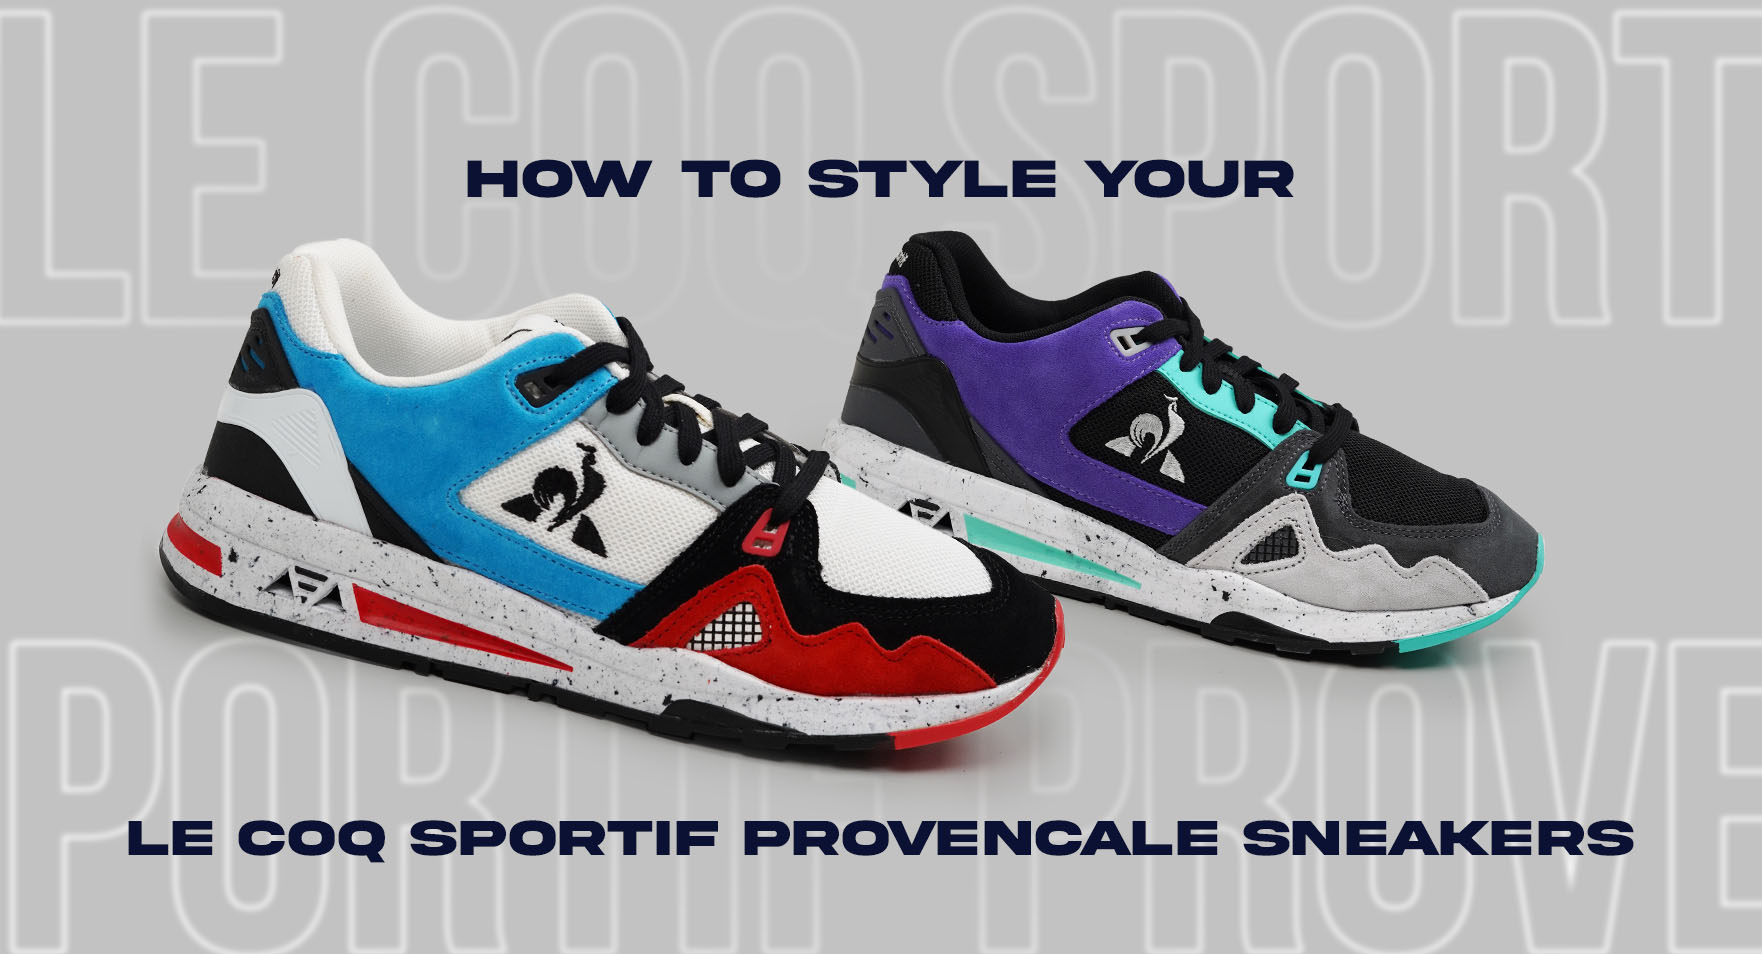 https://www.side-step.co.za/media/mageplaza/blog/post/1/_/1_le_coq_sportif_provencale_sneakers_main_image.jpg